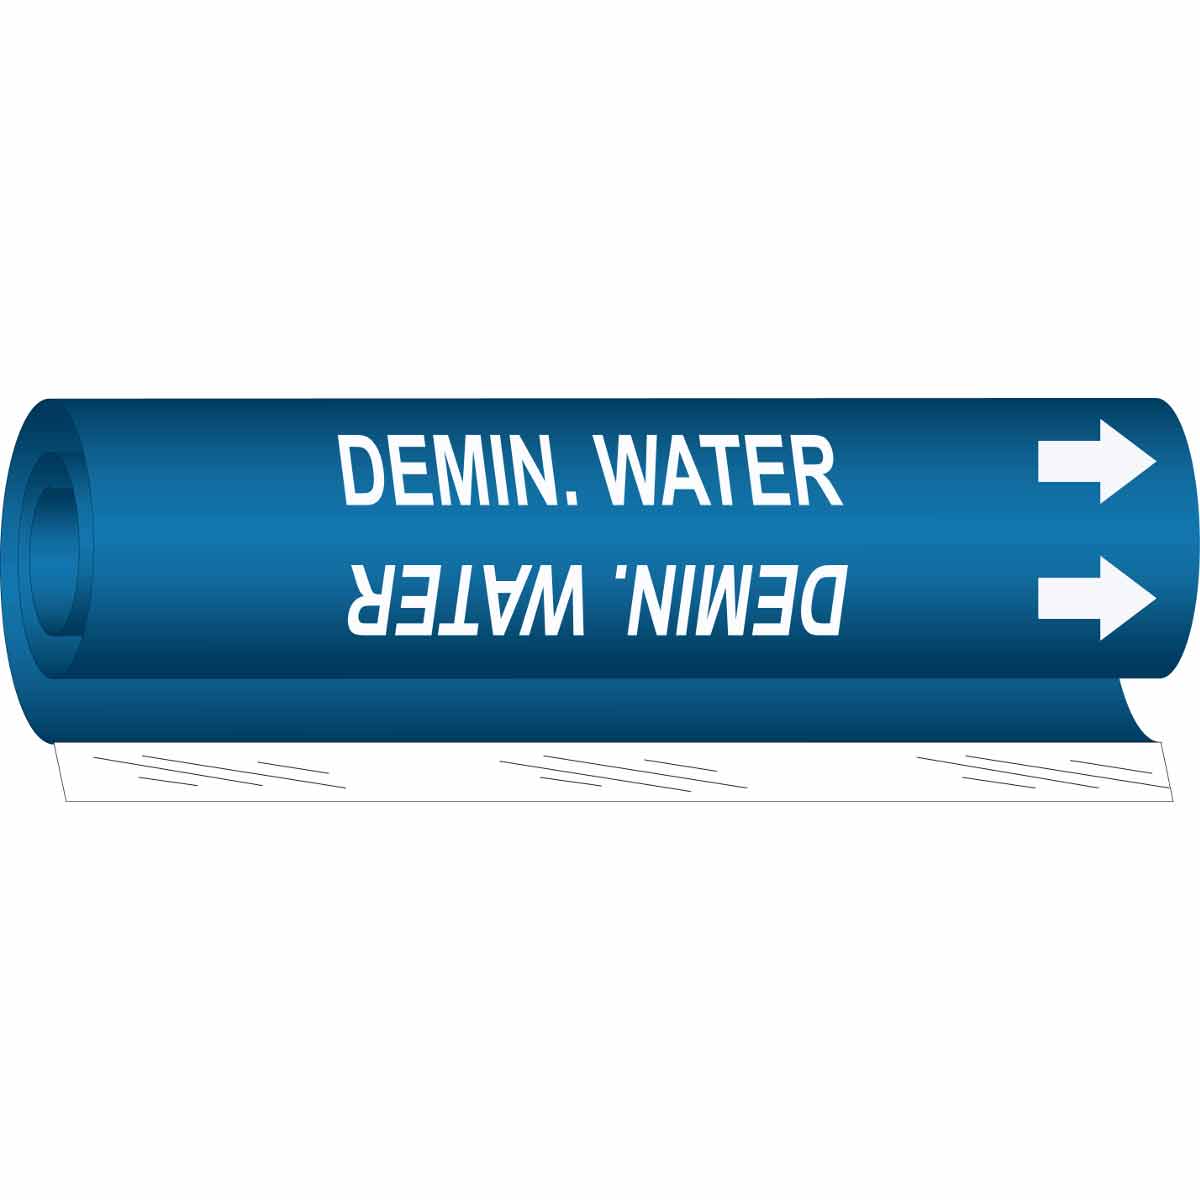 DEMIN. WATER WHITE / BLUE